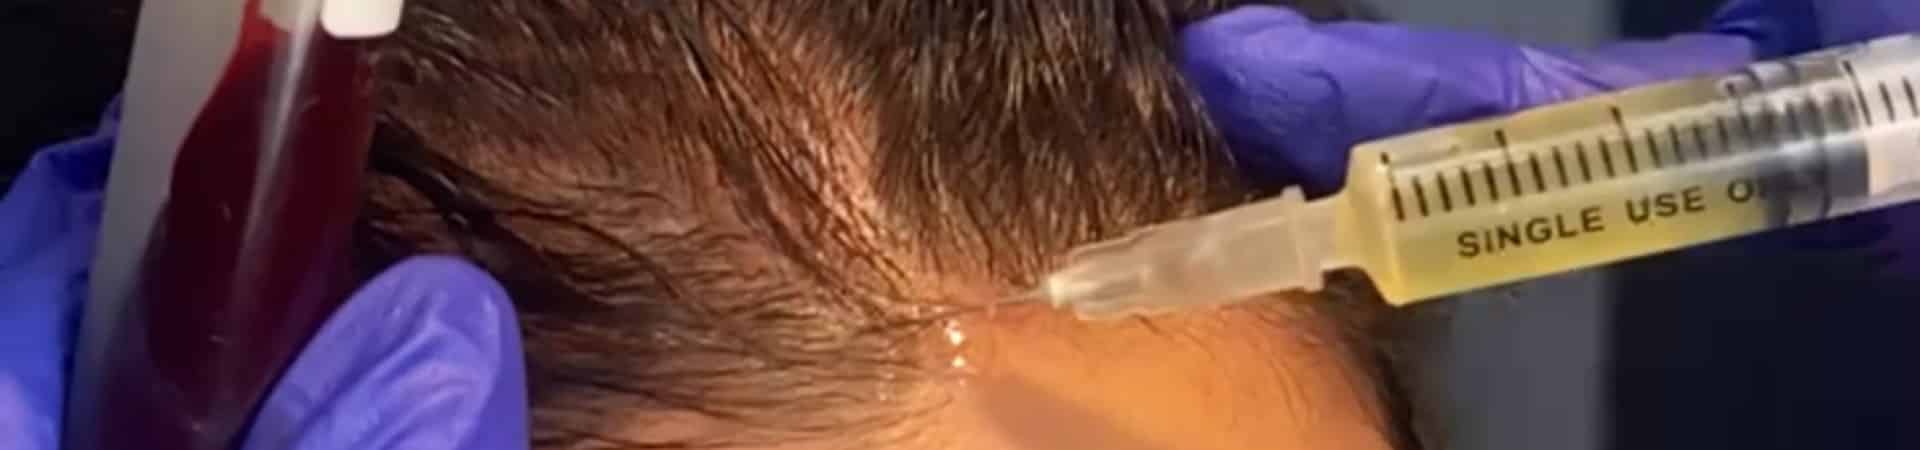 Hair Loss Blood Plasma Treatment in Cortlandt | PRP Hair Restoration Treatment - Hudson Aesthetics